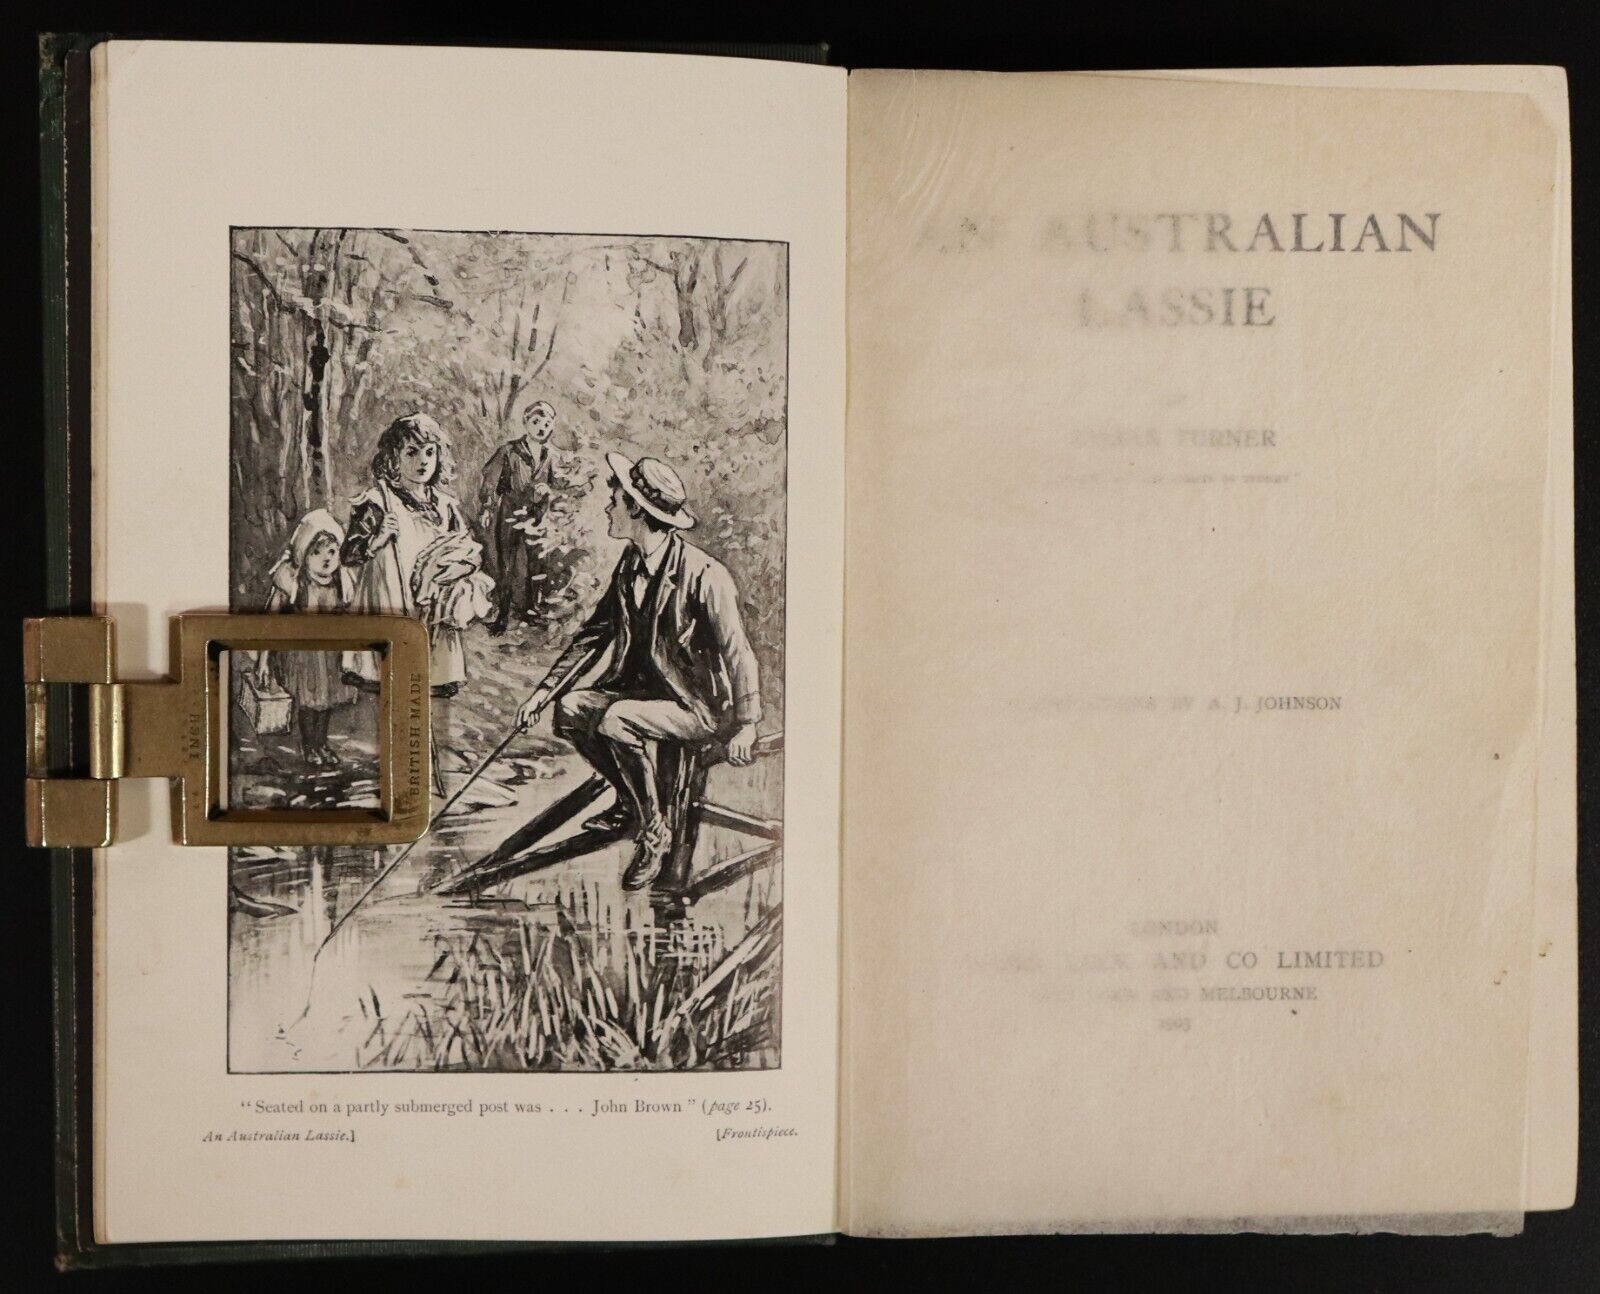 1903 An Australian Lassie by Lilian Turner 1st Edition Antique Fiction Book - 0